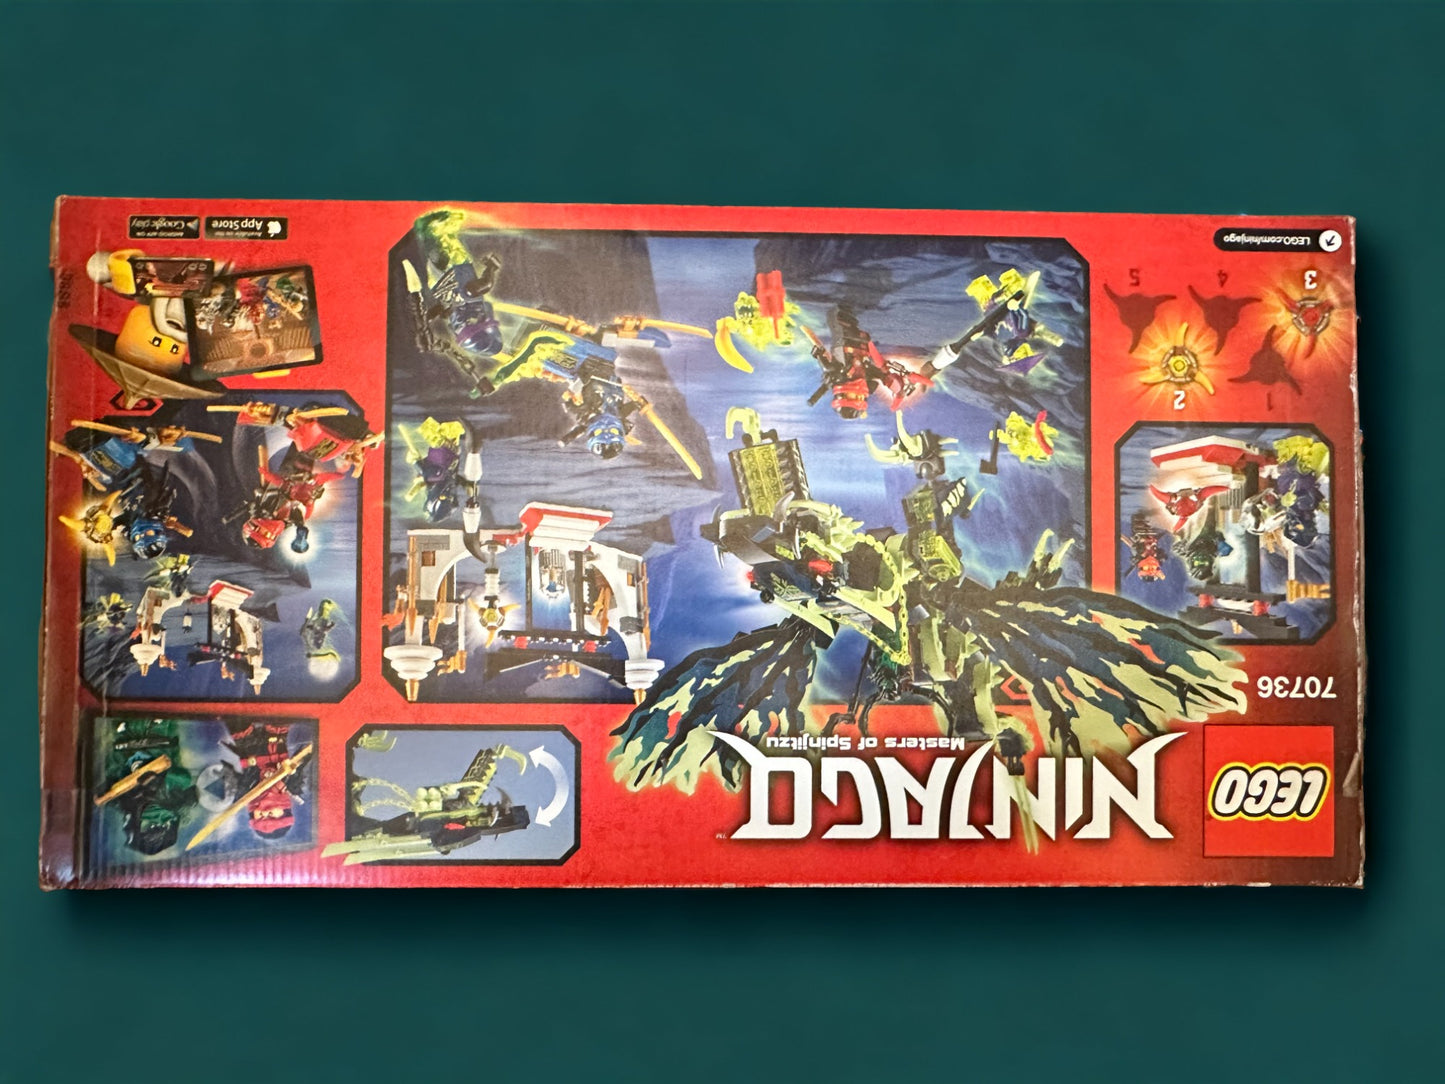 LEGO NINJAGO: Attack of the Morro Dragon (70736) New MISB